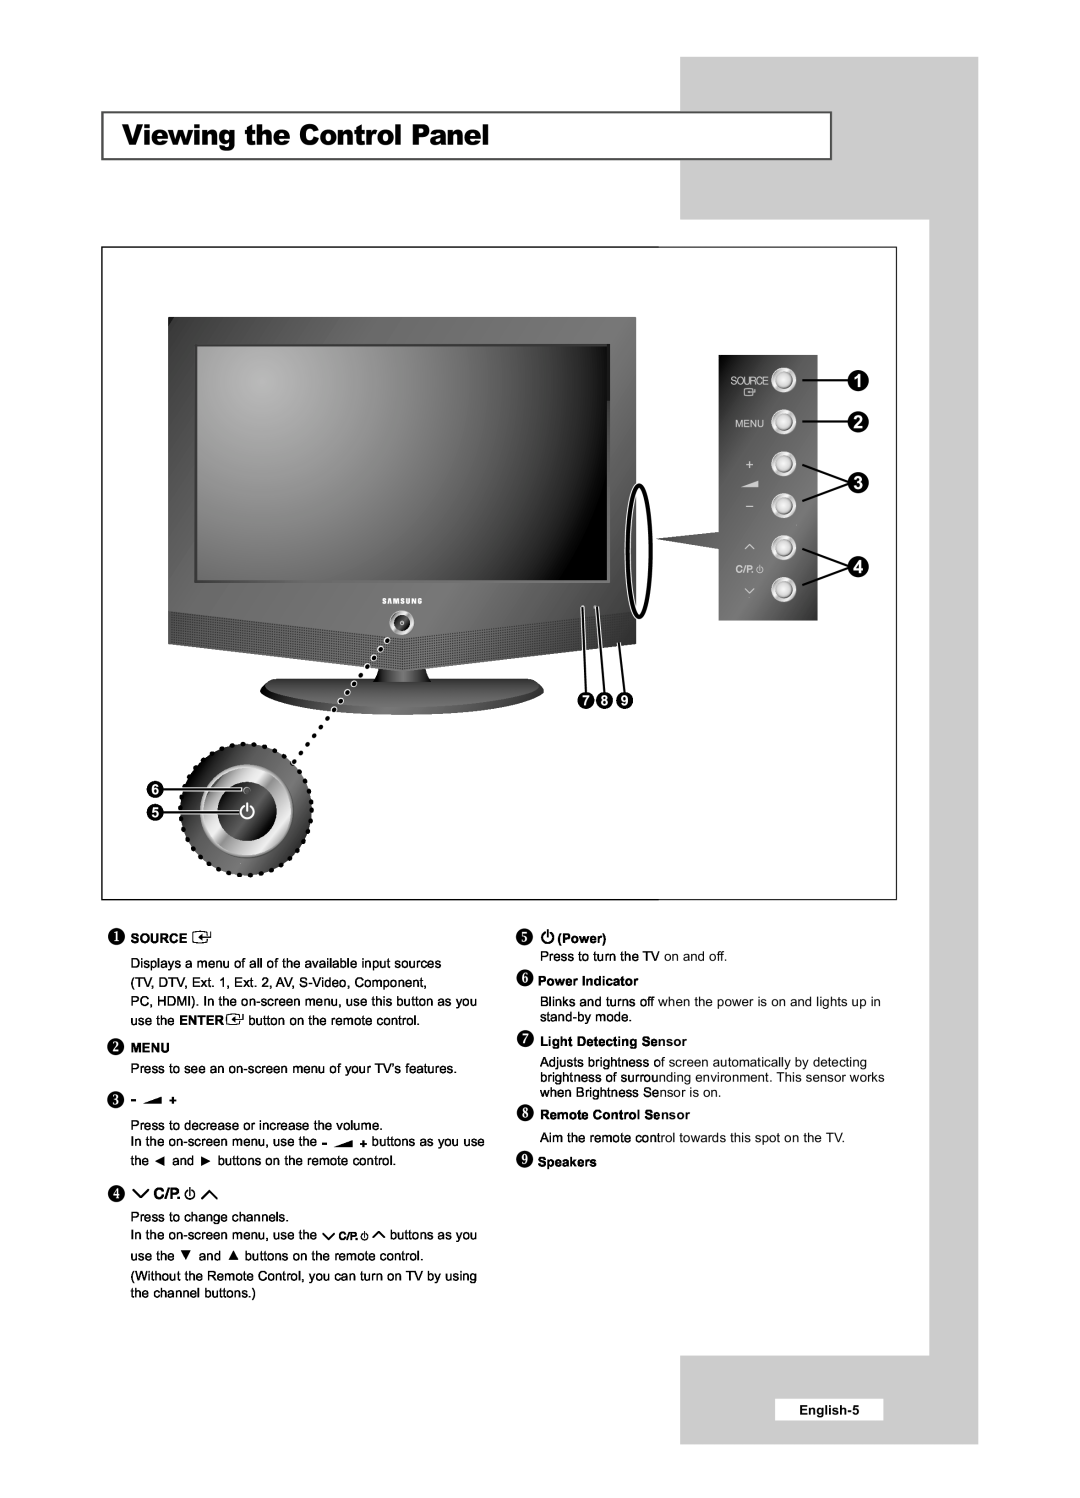 Samsung LE26R53BD manual Viewing the Control Panel, Source, Menu, Power Indicator, Light Detecting Sensor, Speakers 